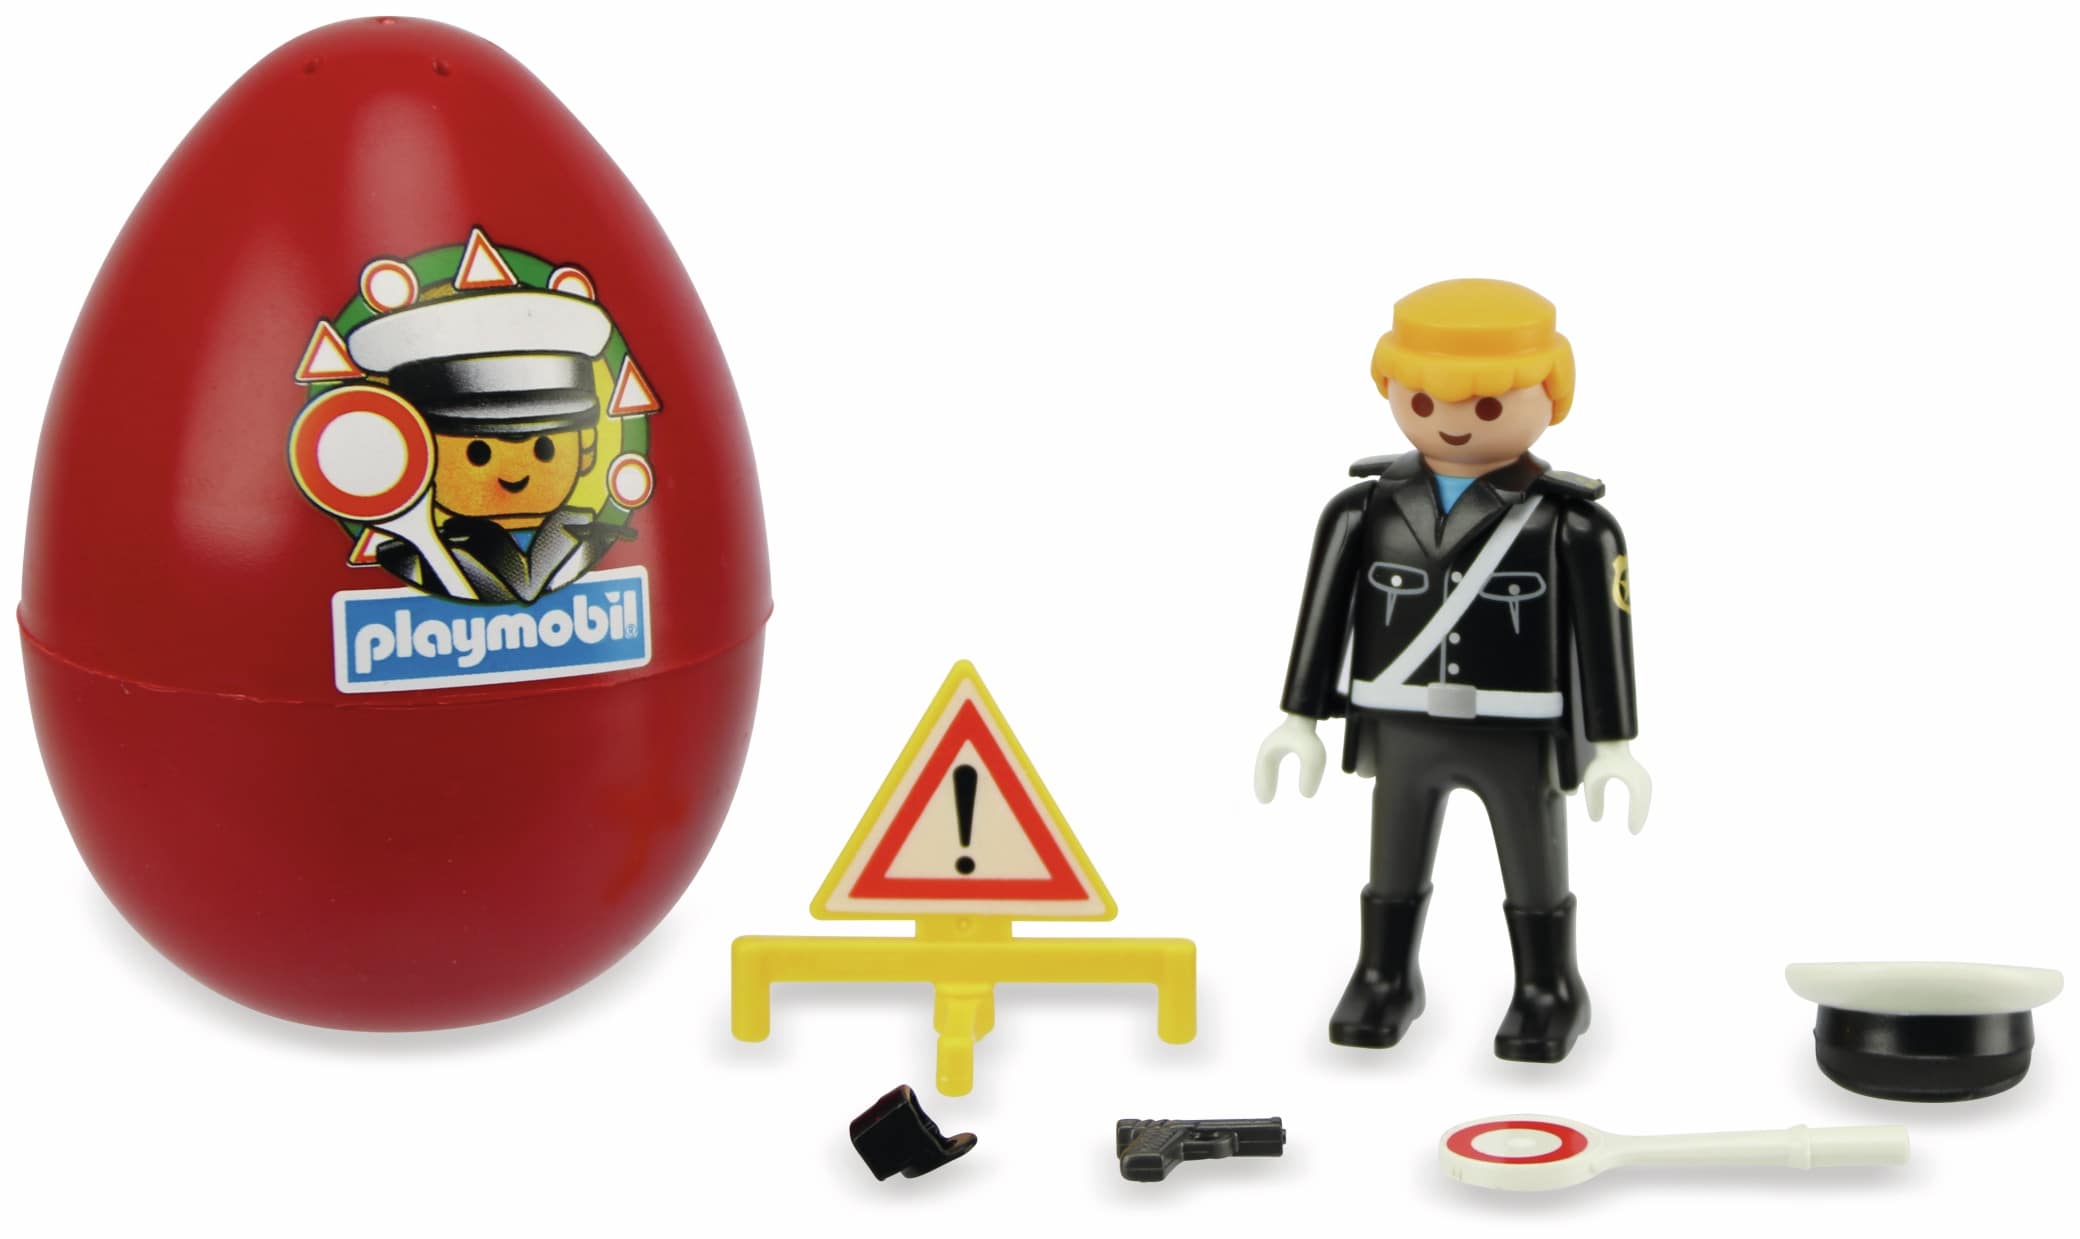 Playmobil "Polizist"